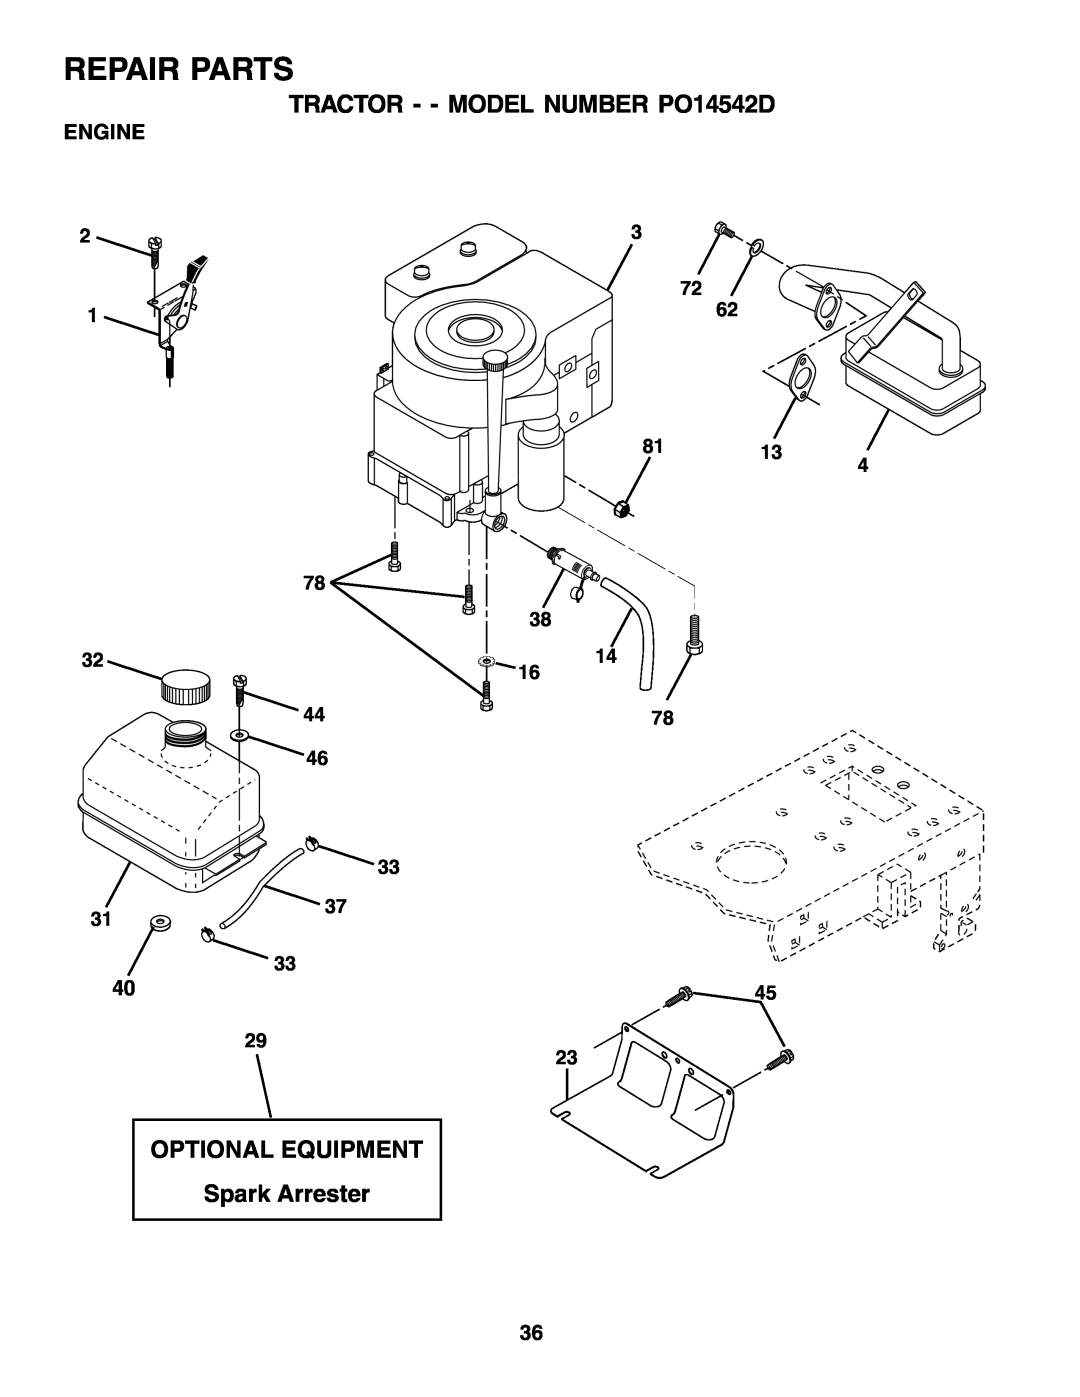 Poulan manual Repair Parts, TRACTOR - - MODEL NUMBER PO14542D, OPTIONAL EQUIPMENT Spark Arrester, Engine 